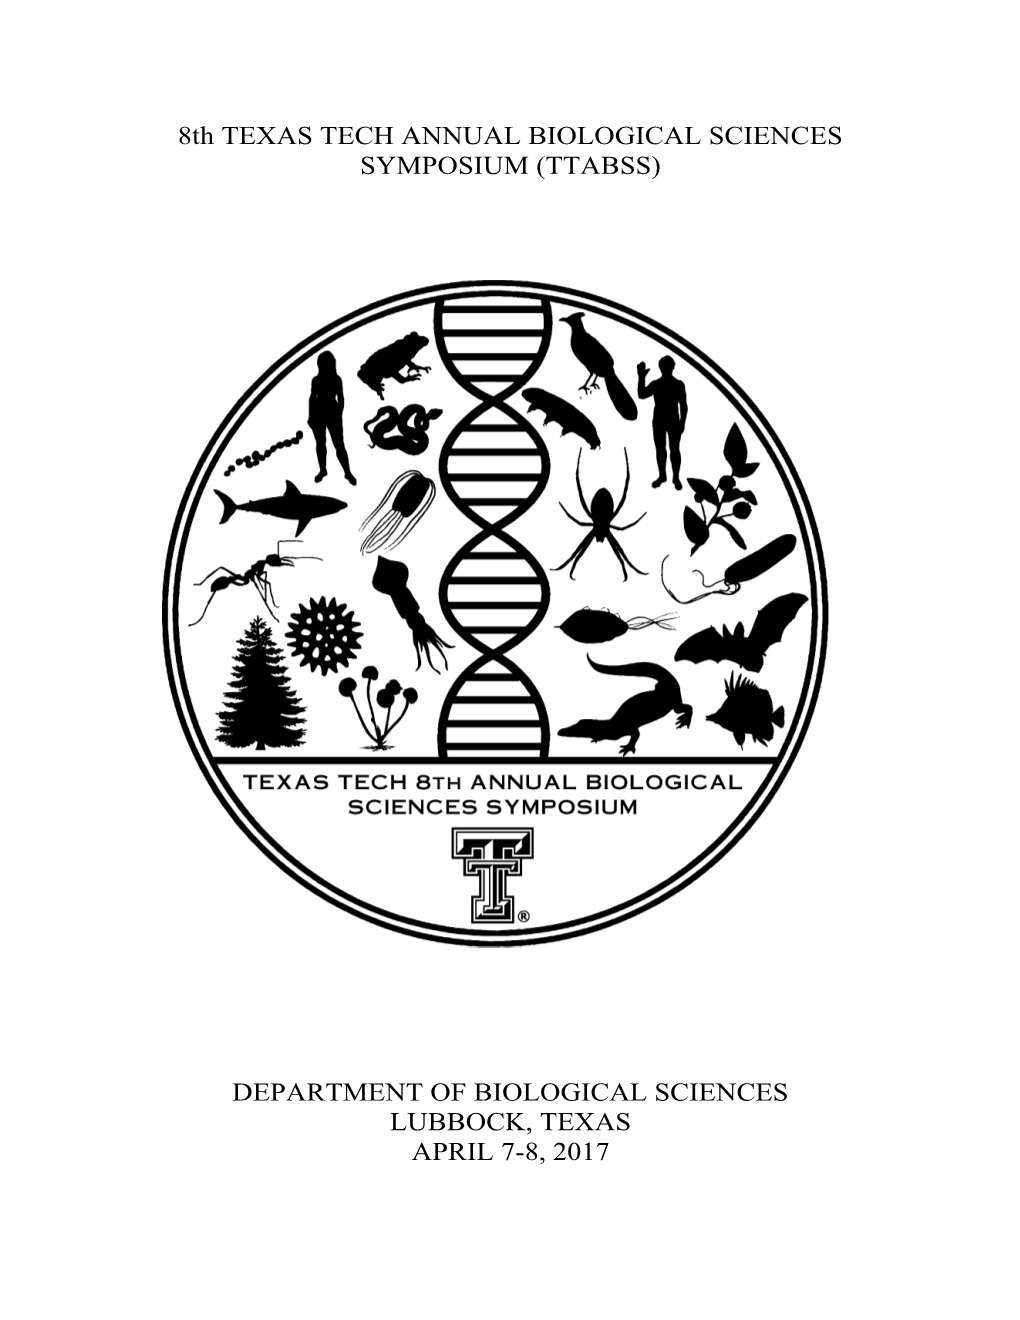 (Ttabss) Department of Biological Sciences